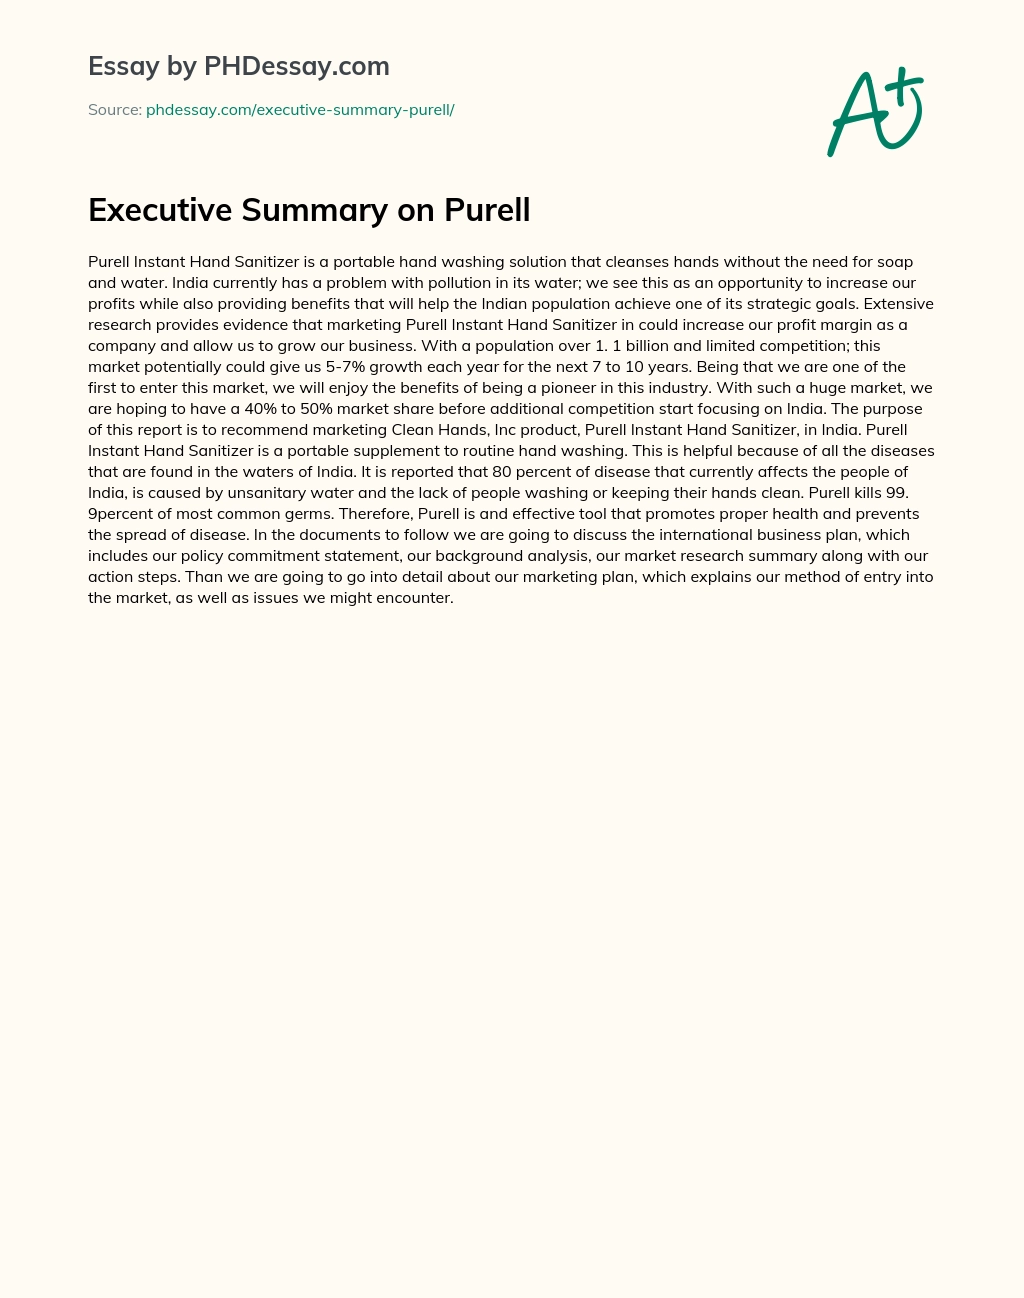 Executive Summary on Purell essay